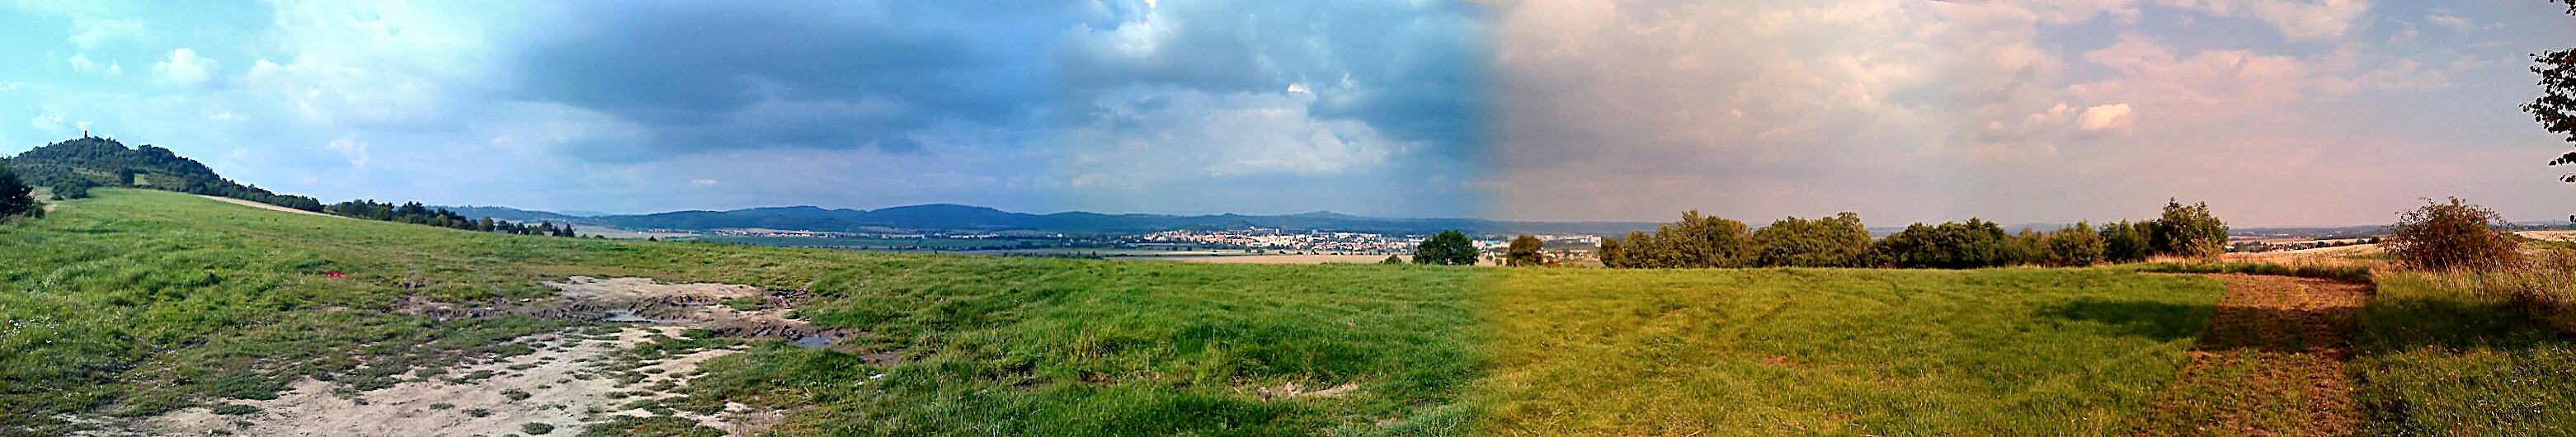 98 Veliš panorama Jičína